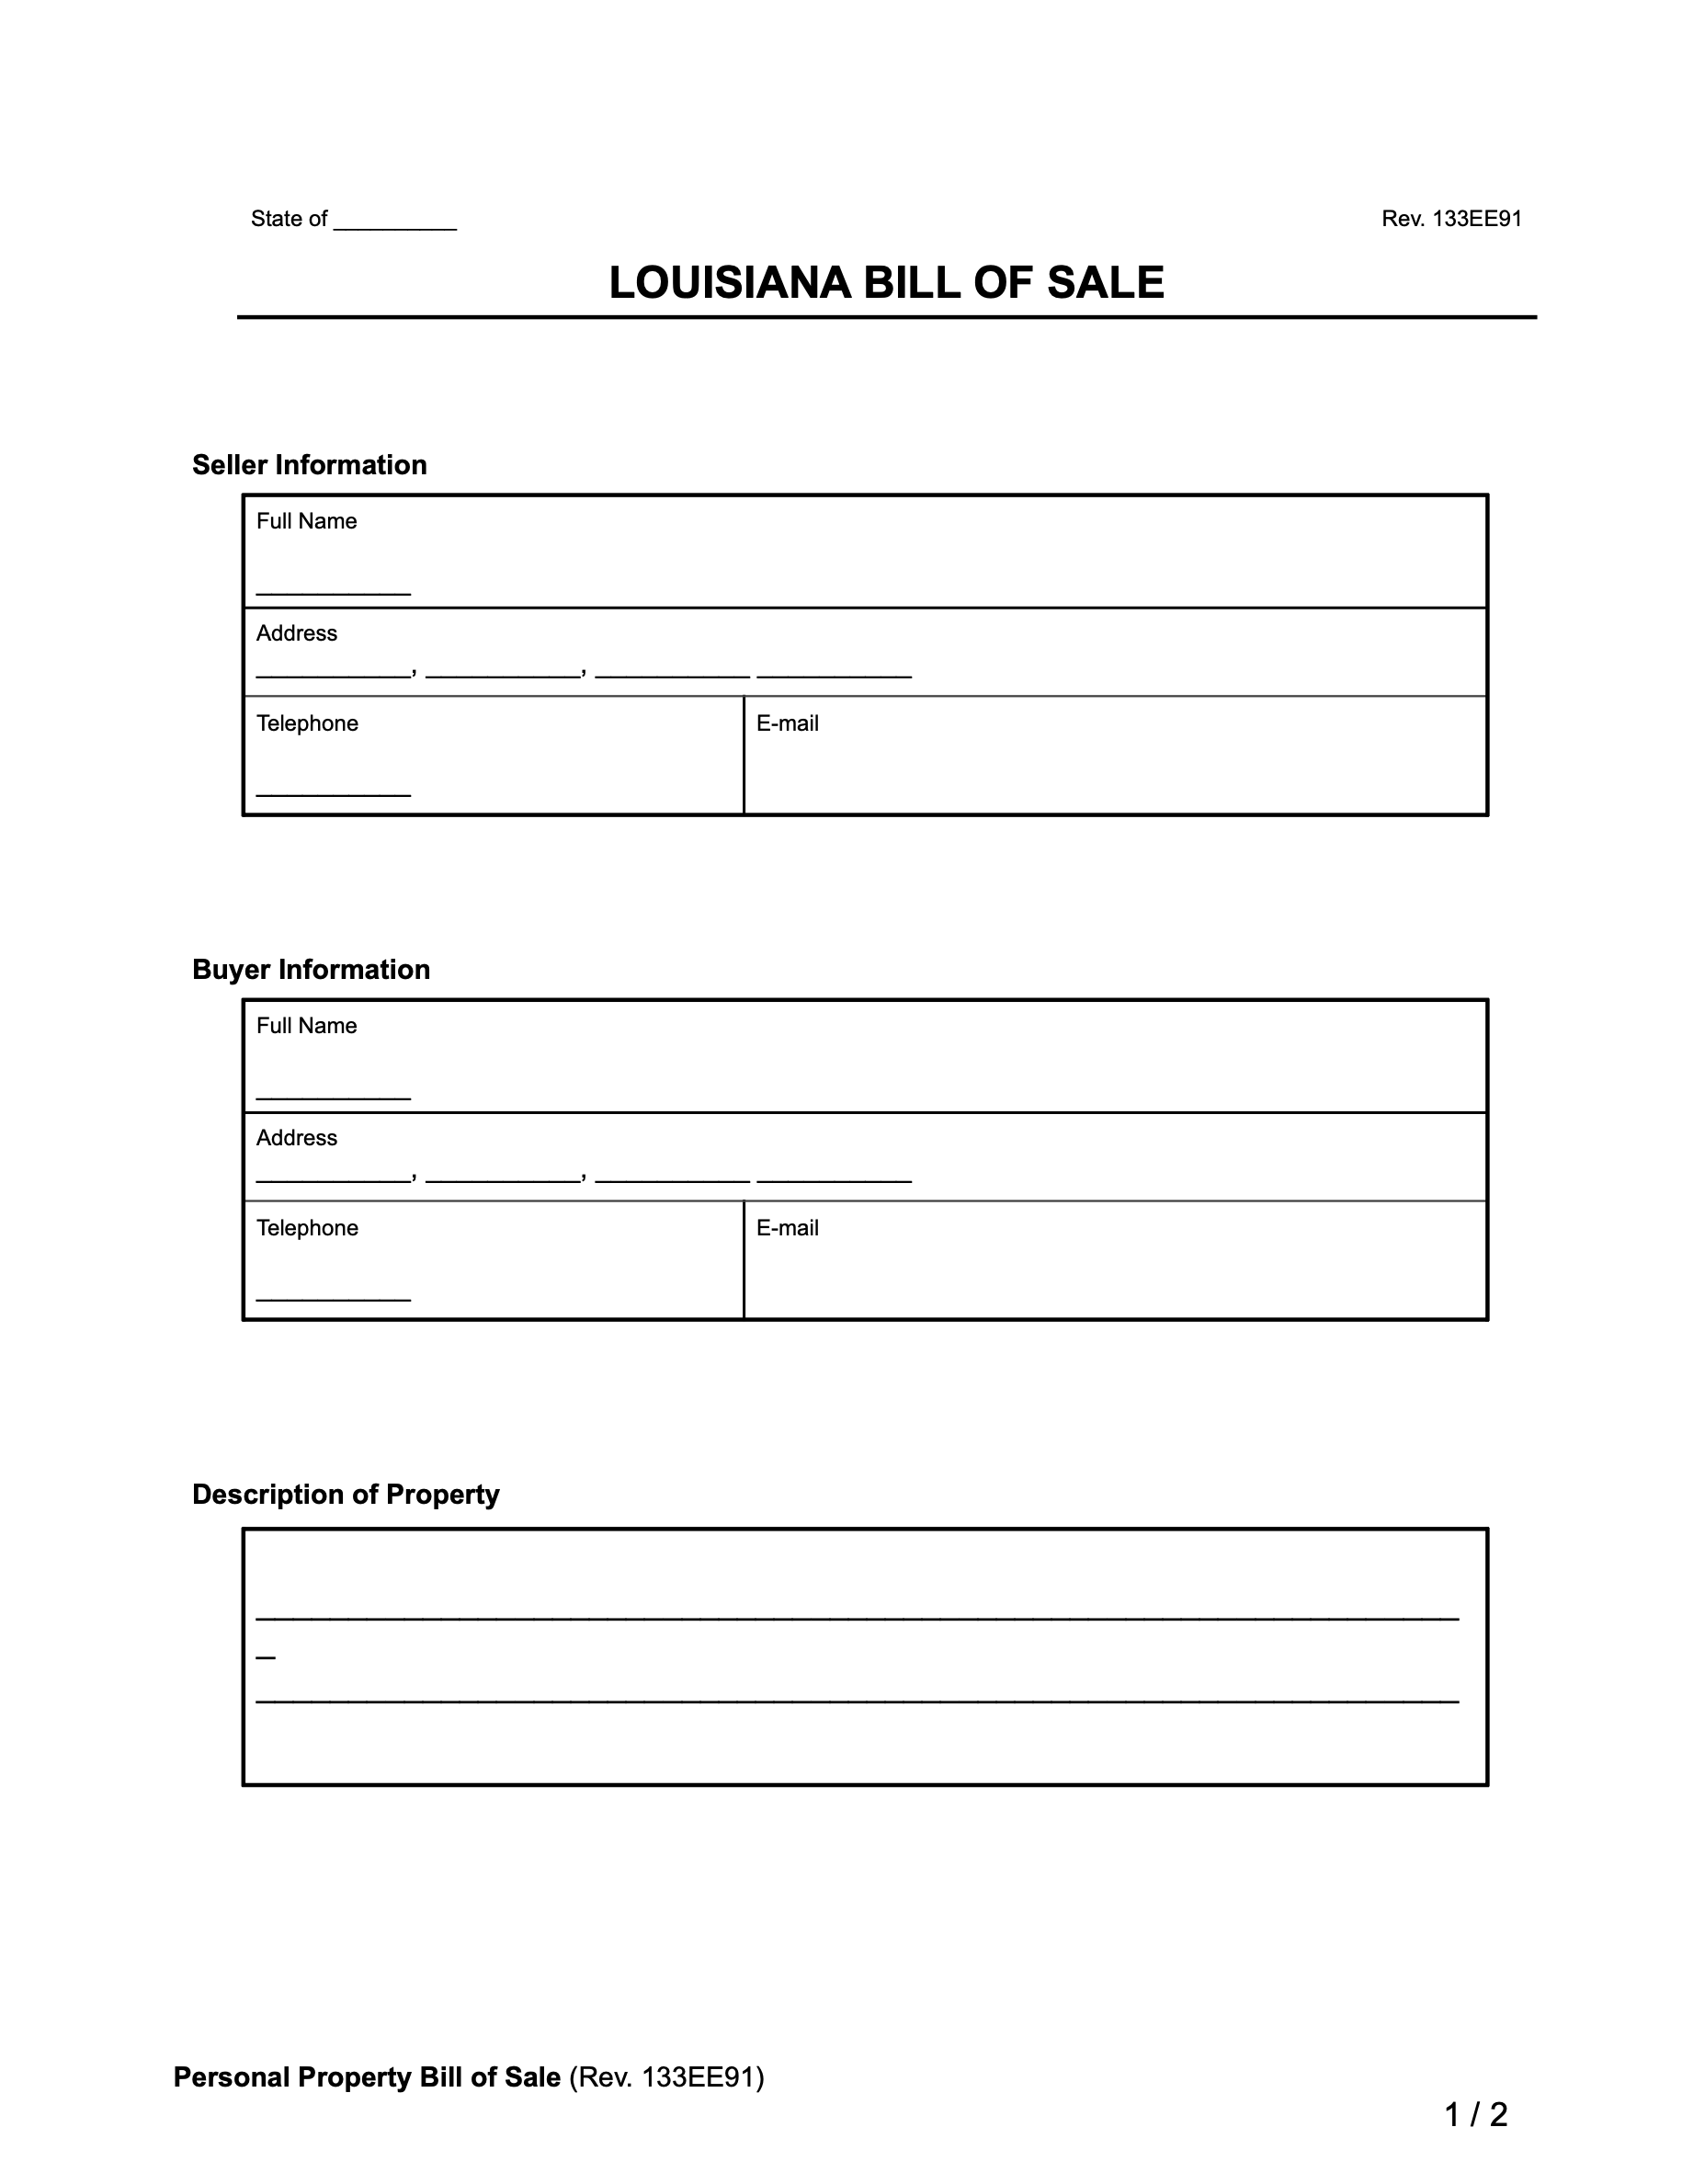 Louisiana bill of sale form